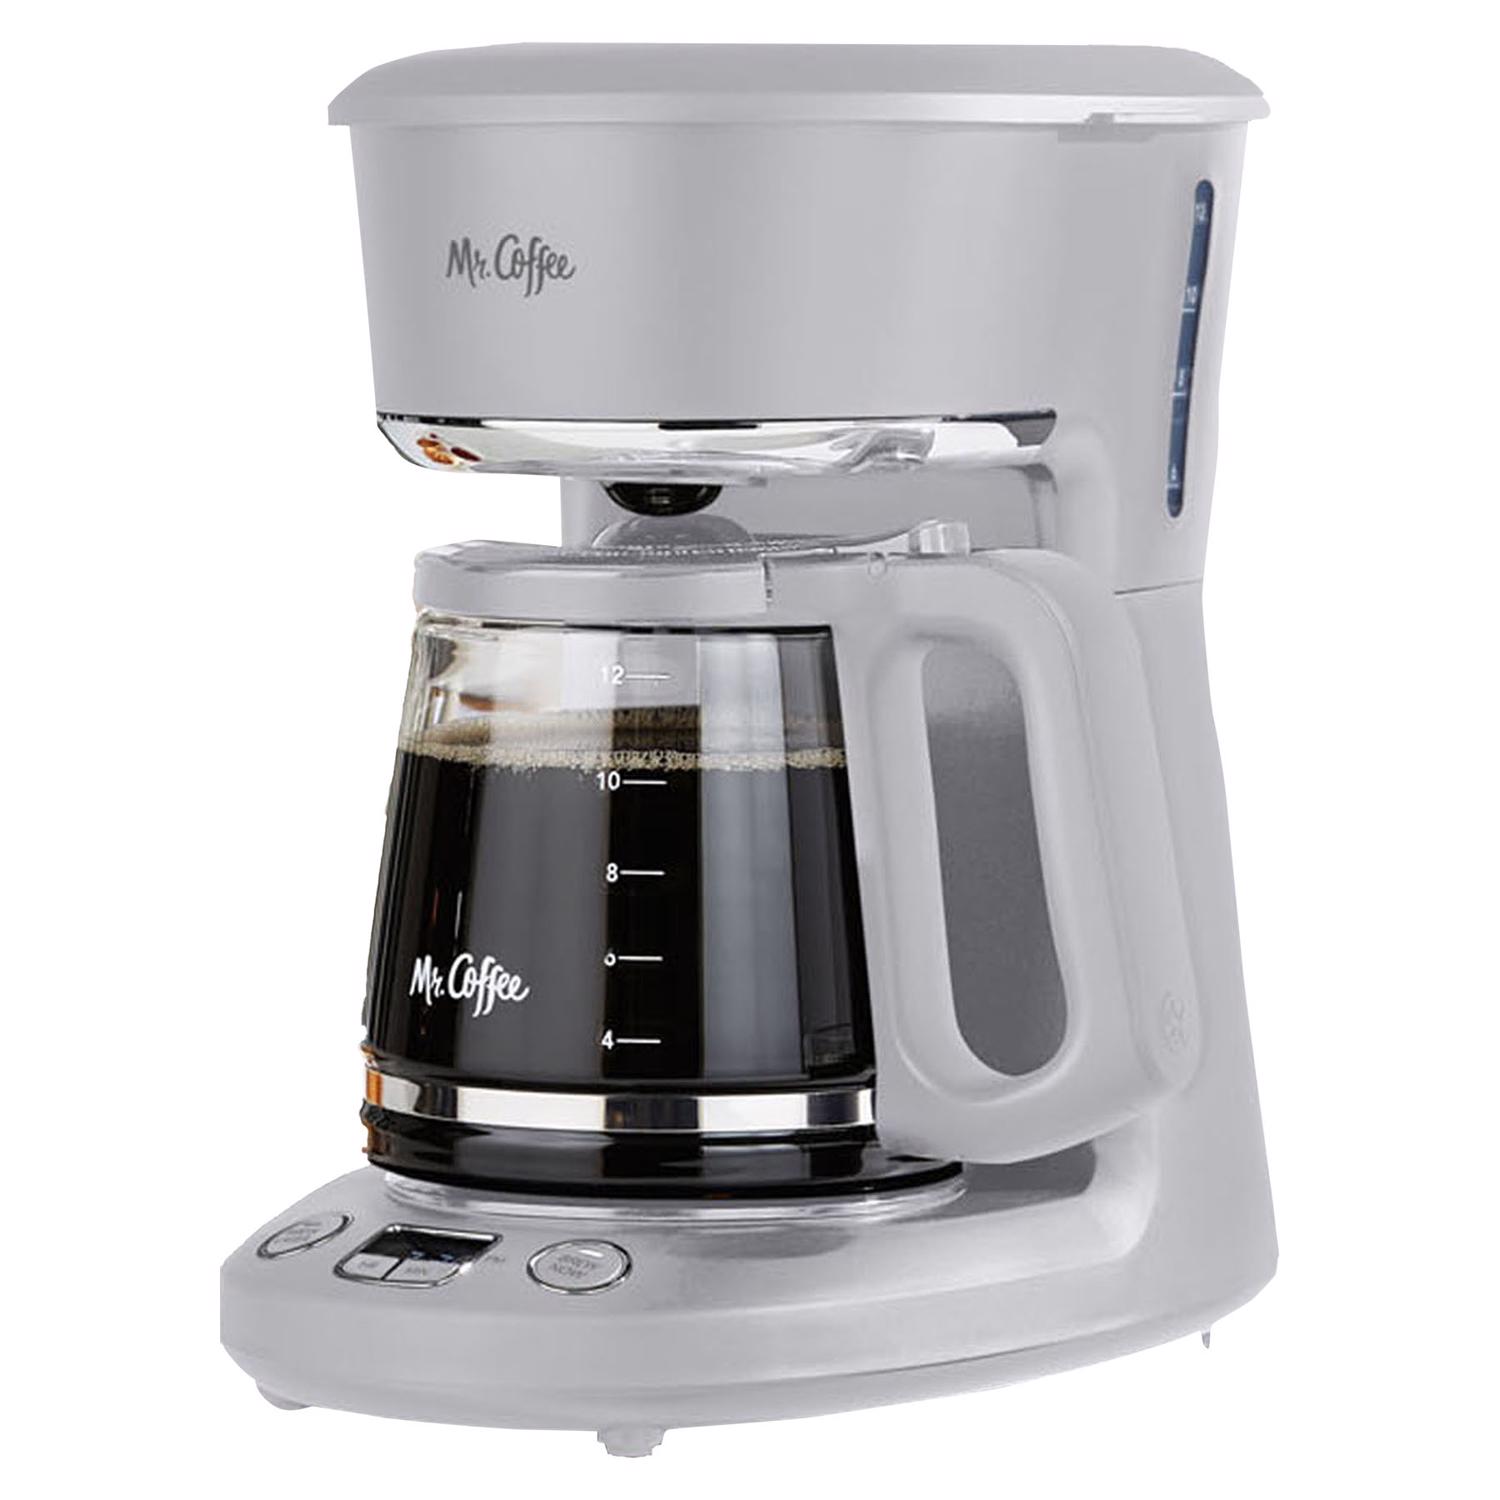 Mr. Coffee 5 Cup Black Coffee Maker